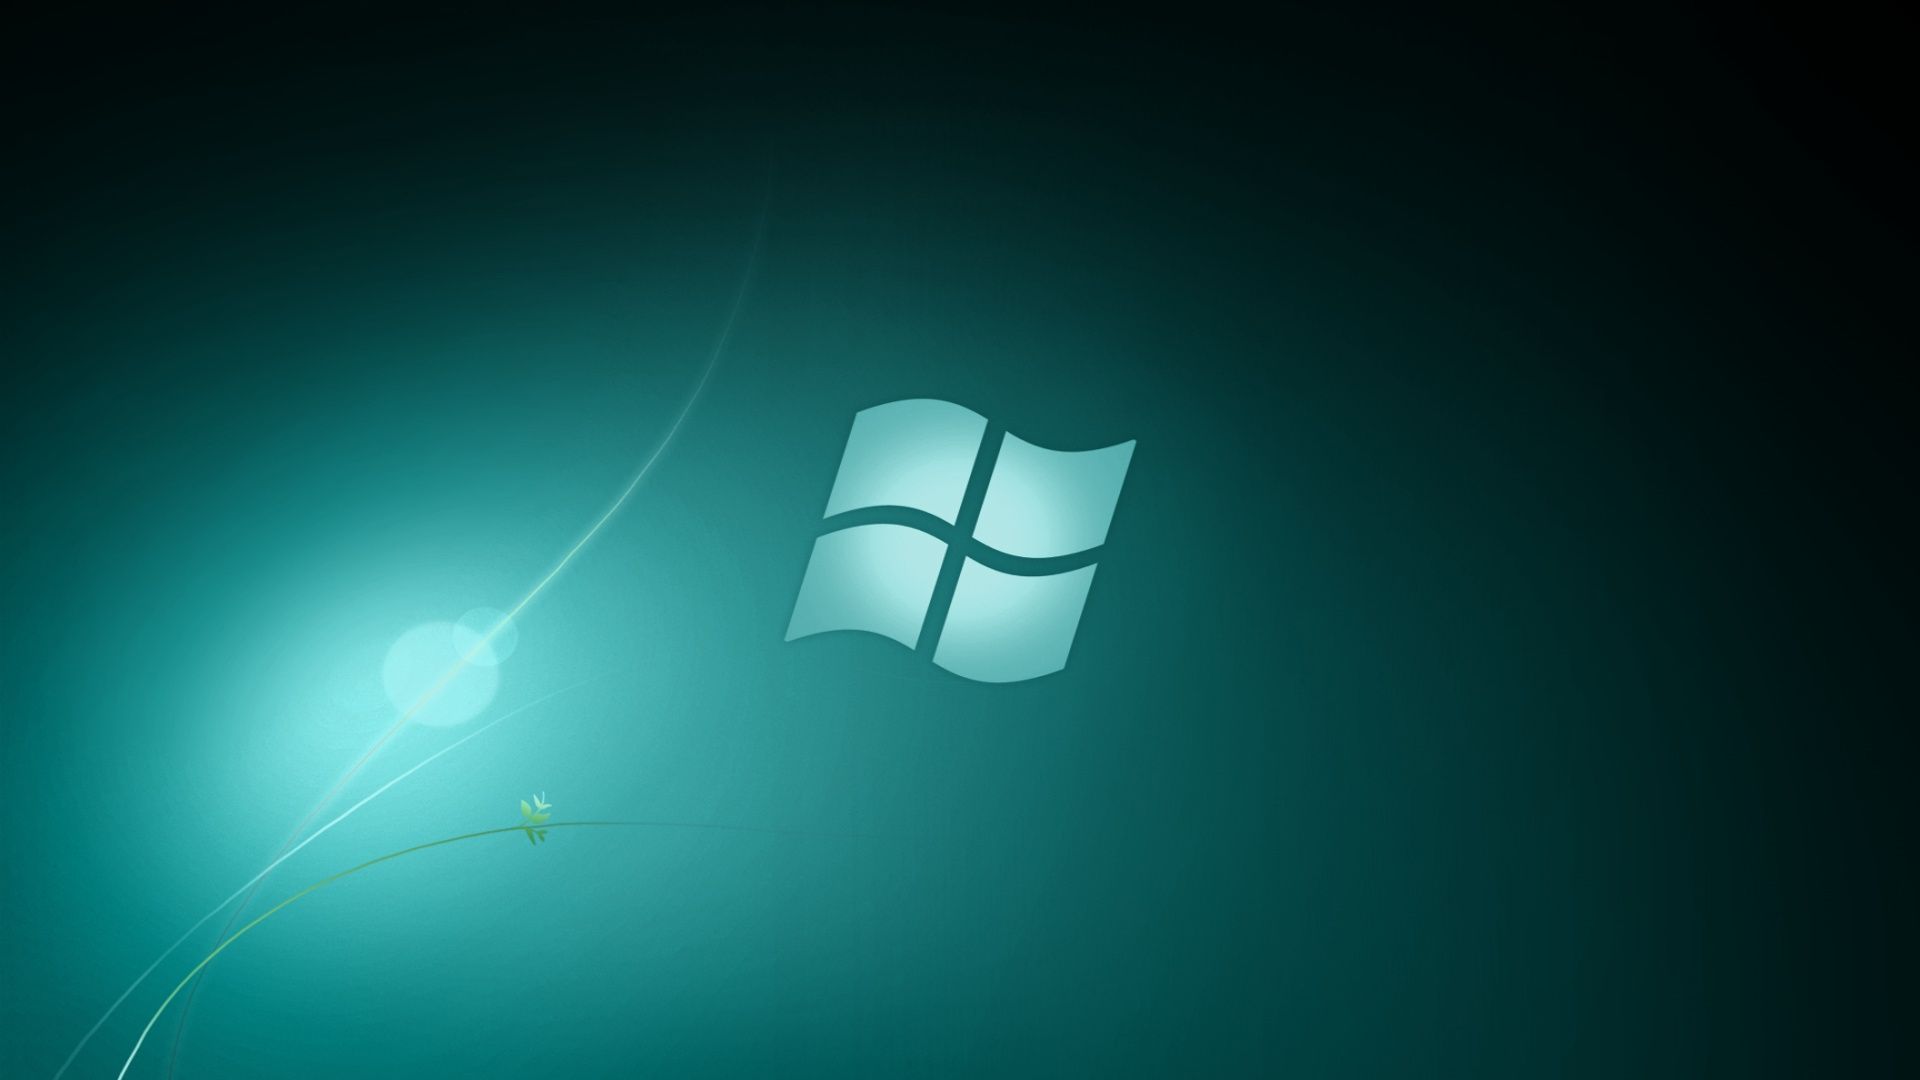 DeviantArt More Like Re enchanted Windows 7 Starter wallpaper by